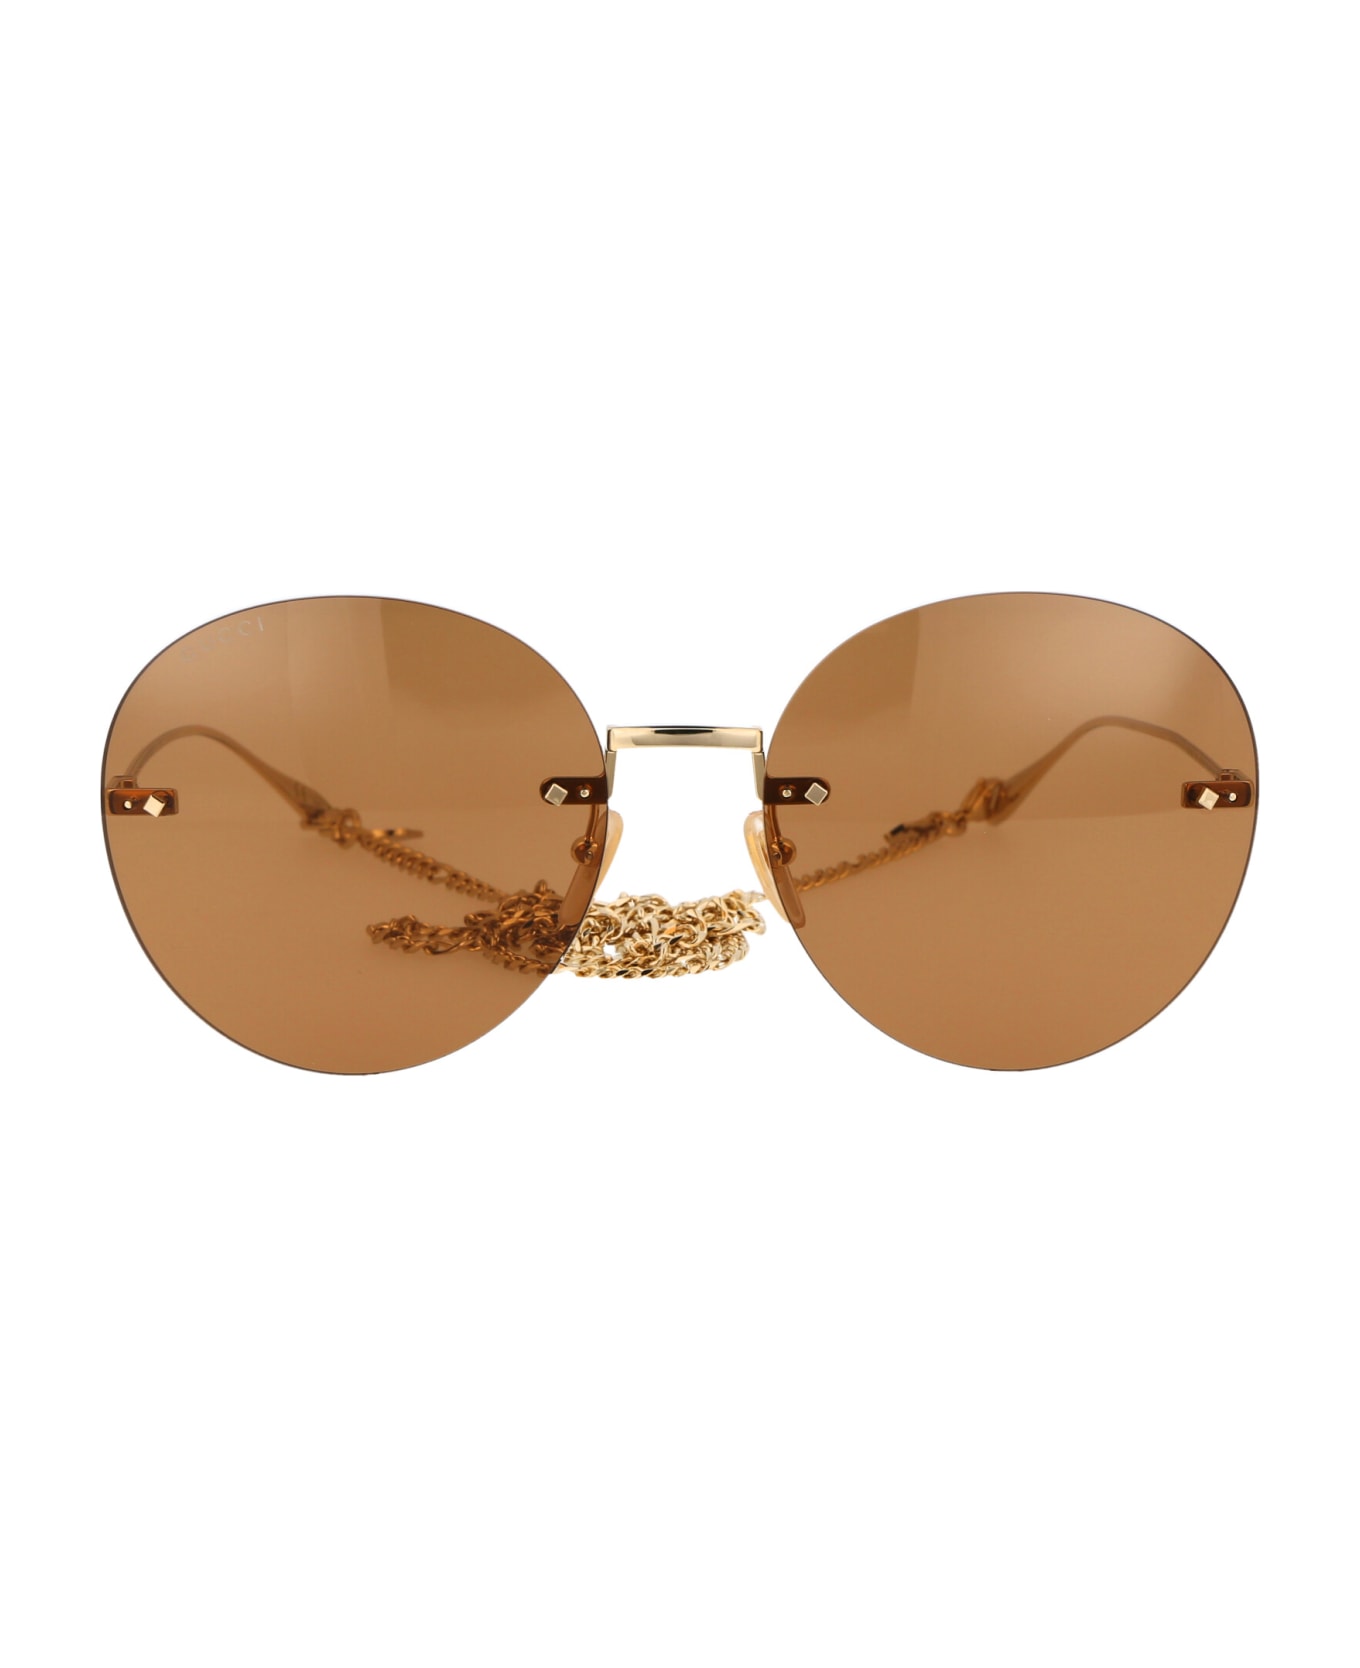 Gucci Eyewear Gg1149s Sunglasses - 003 GOLD GOLD BROWN サングラス